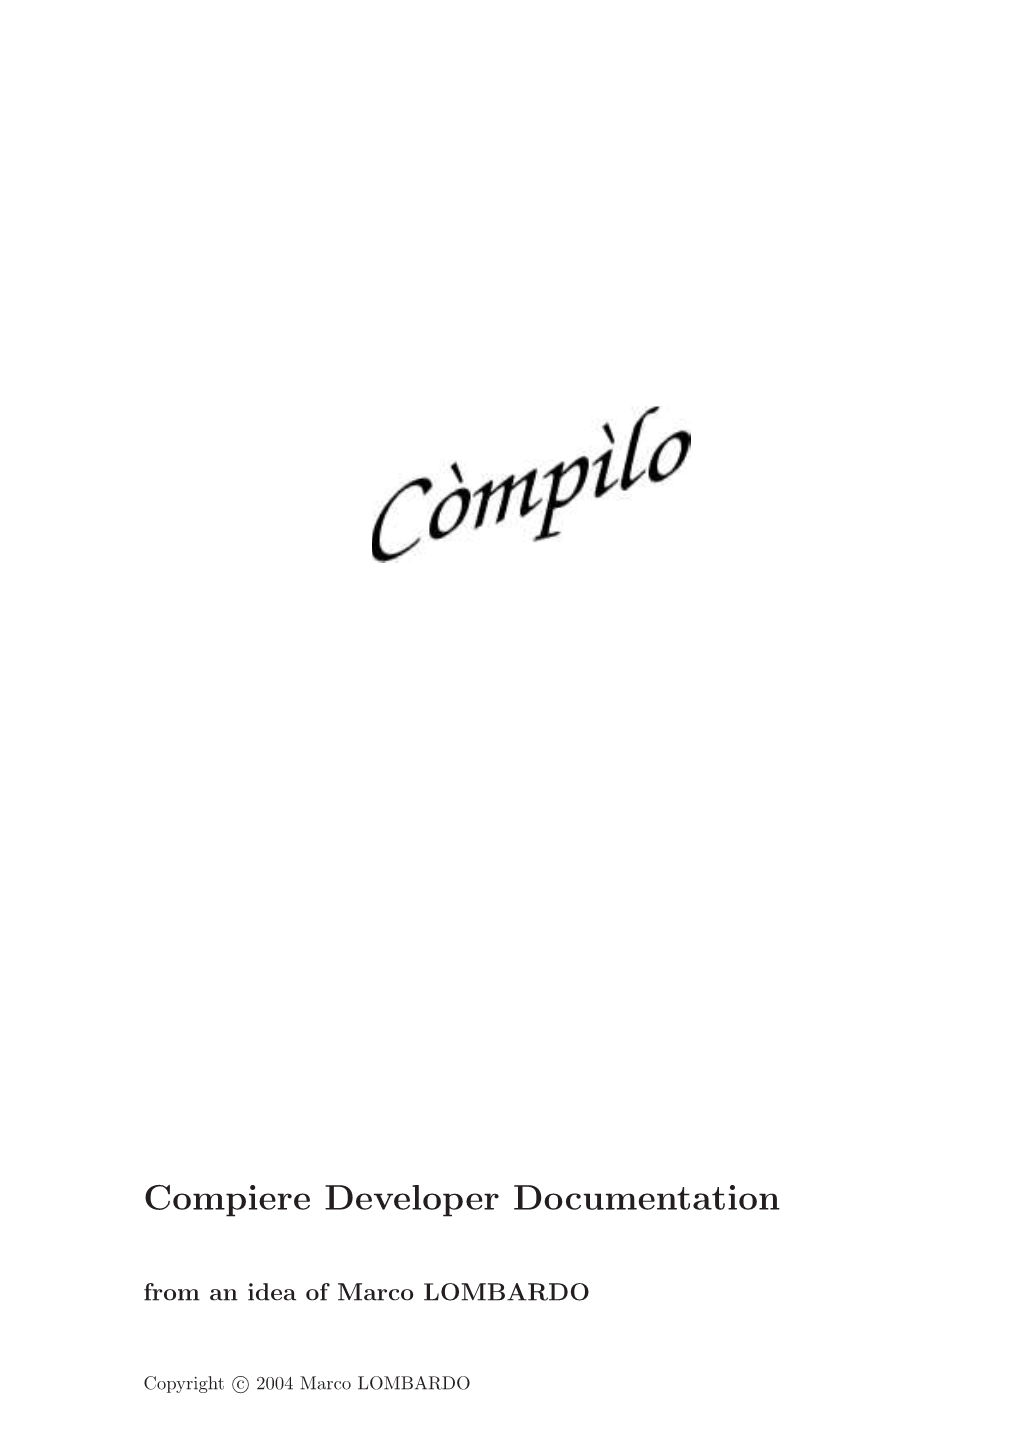 Compiere Developer Documentation from an Idea of Marco LOMBARDO